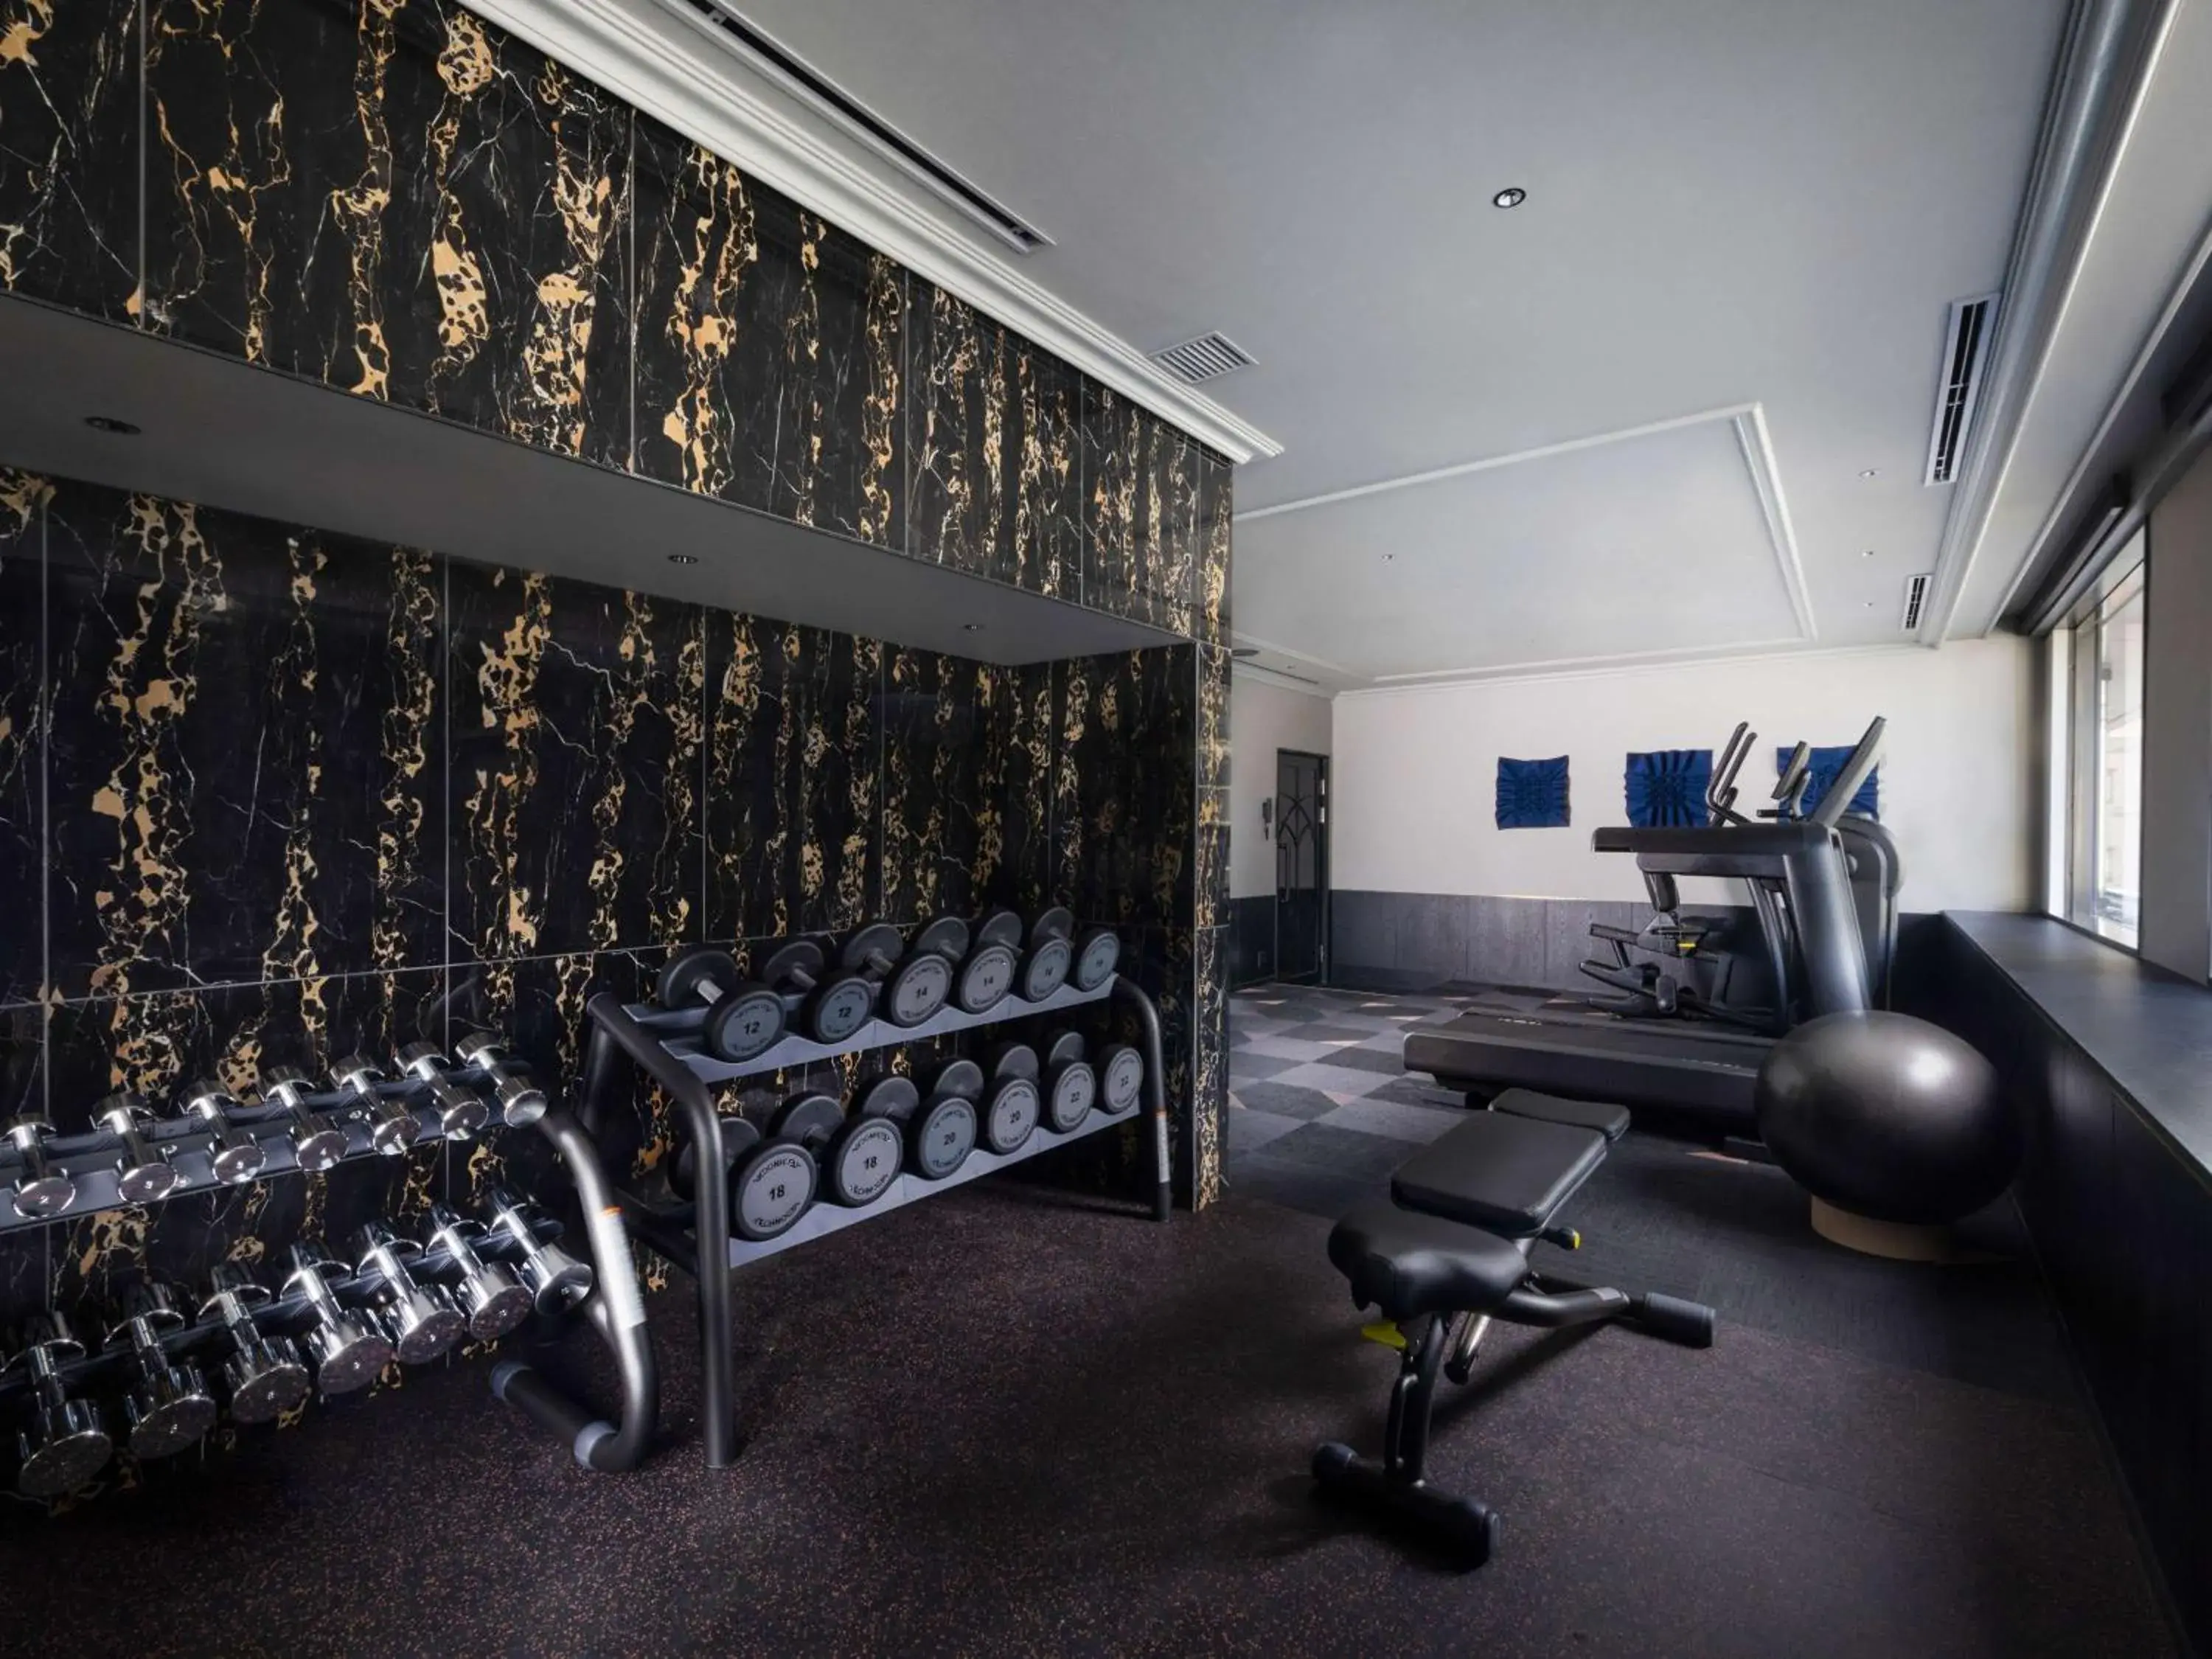 Fitness centre/facilities, Fitness Center/Facilities in Dai-ichi Hotel Annex